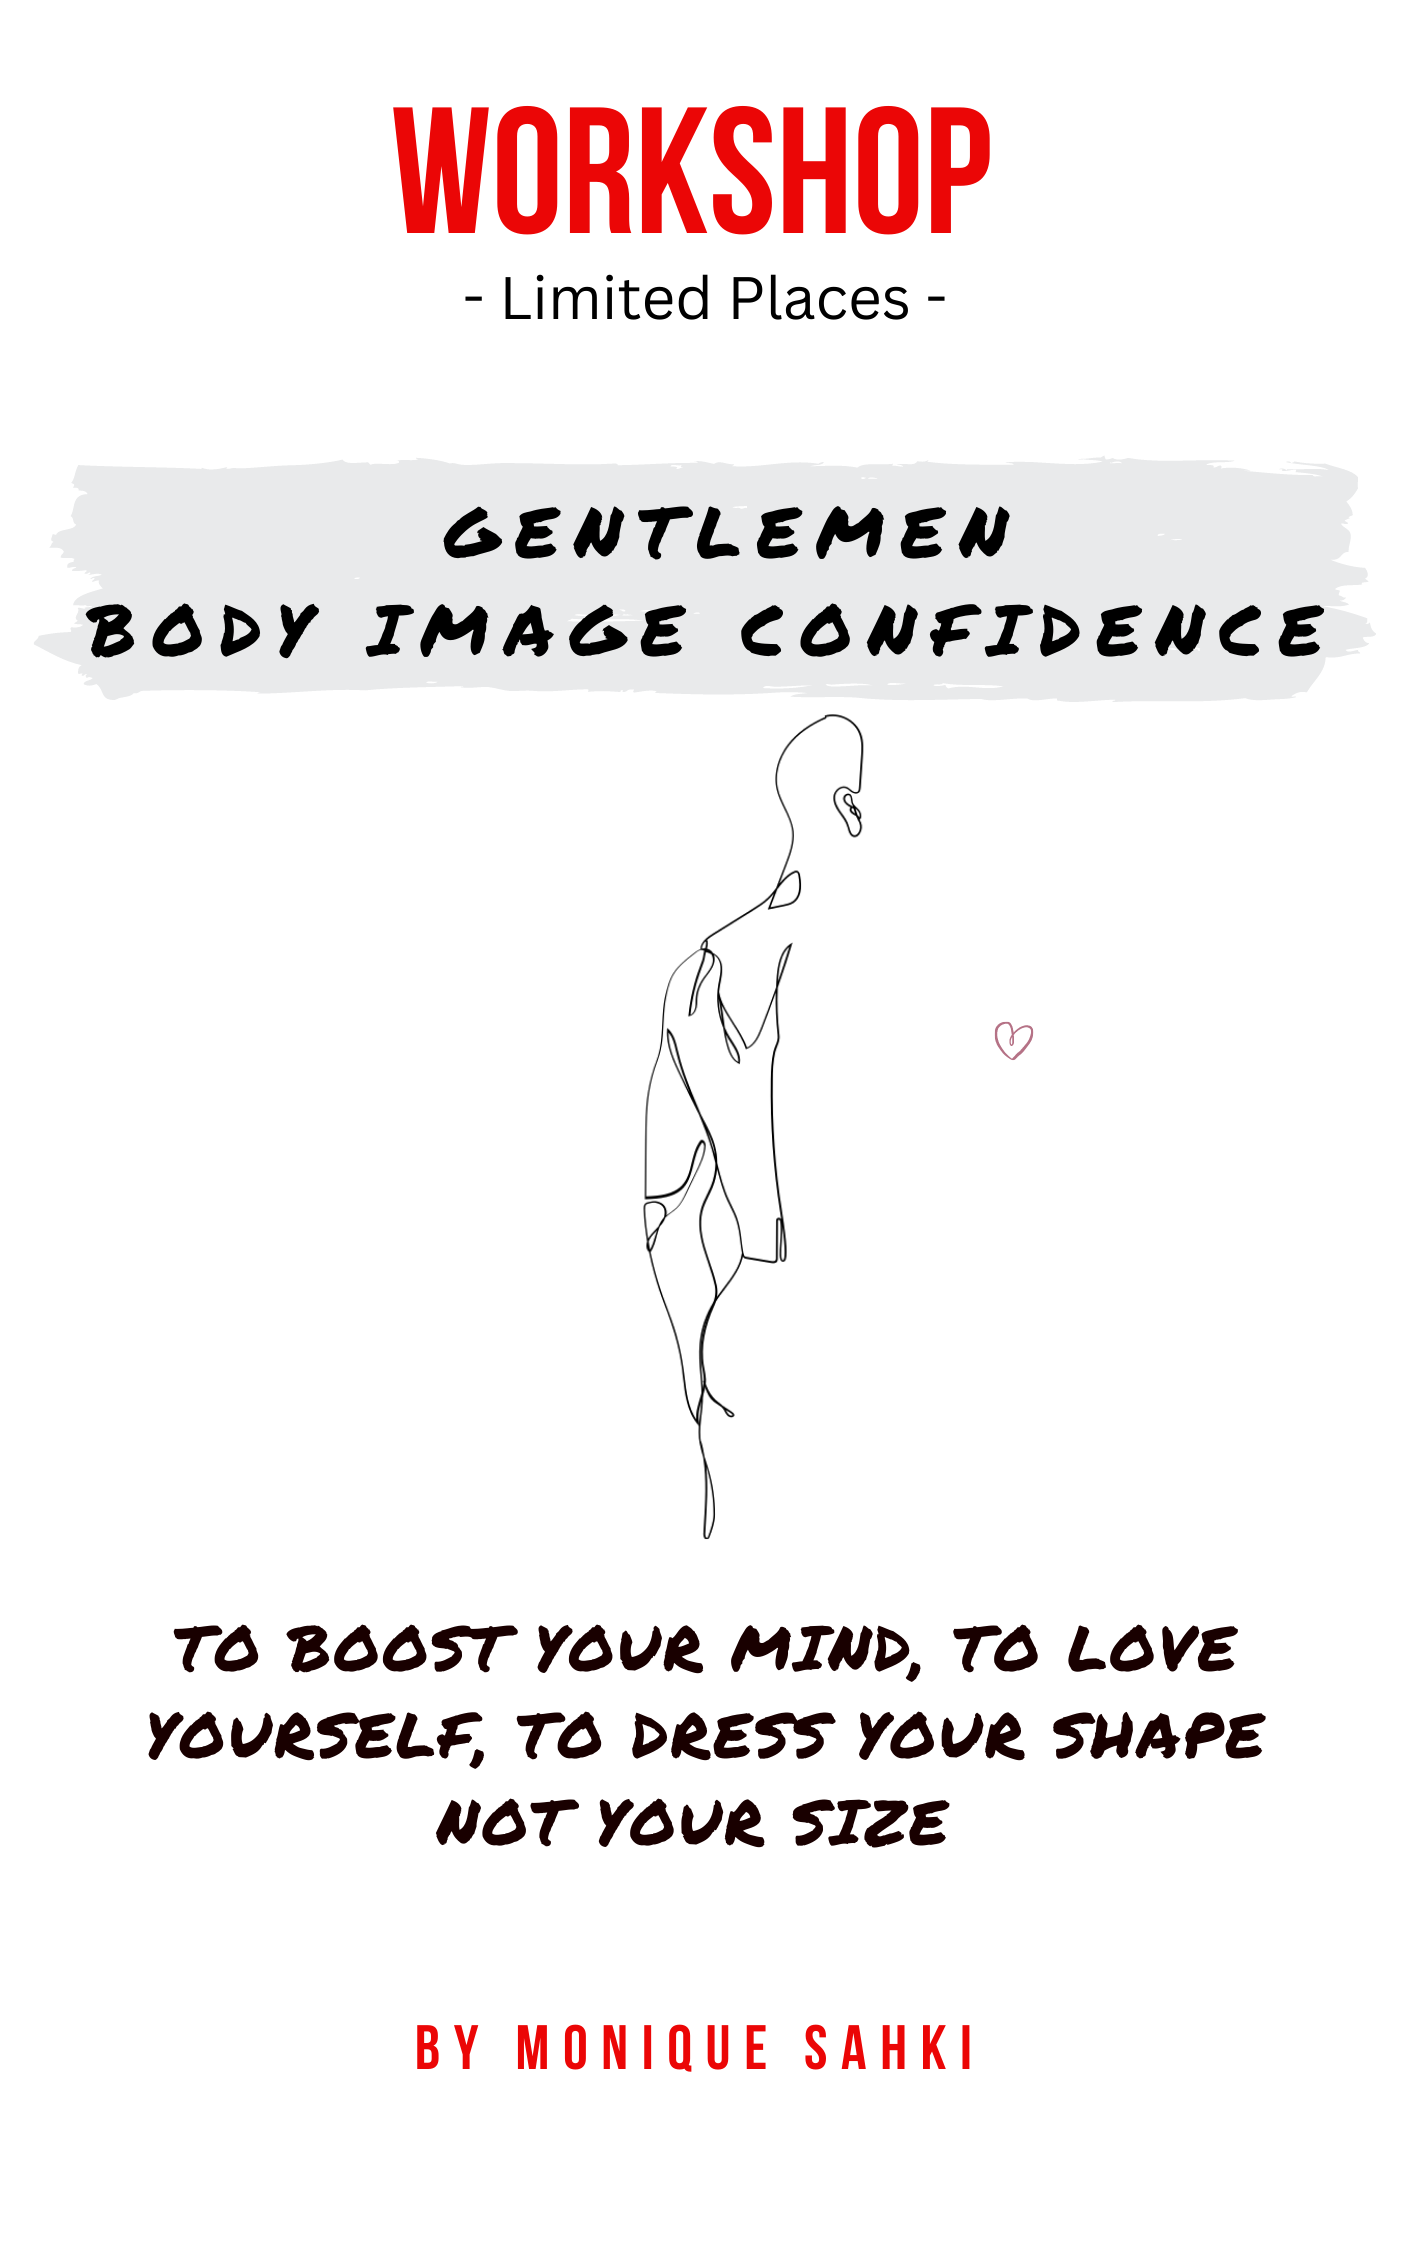 image gentlemen body image confidence.png